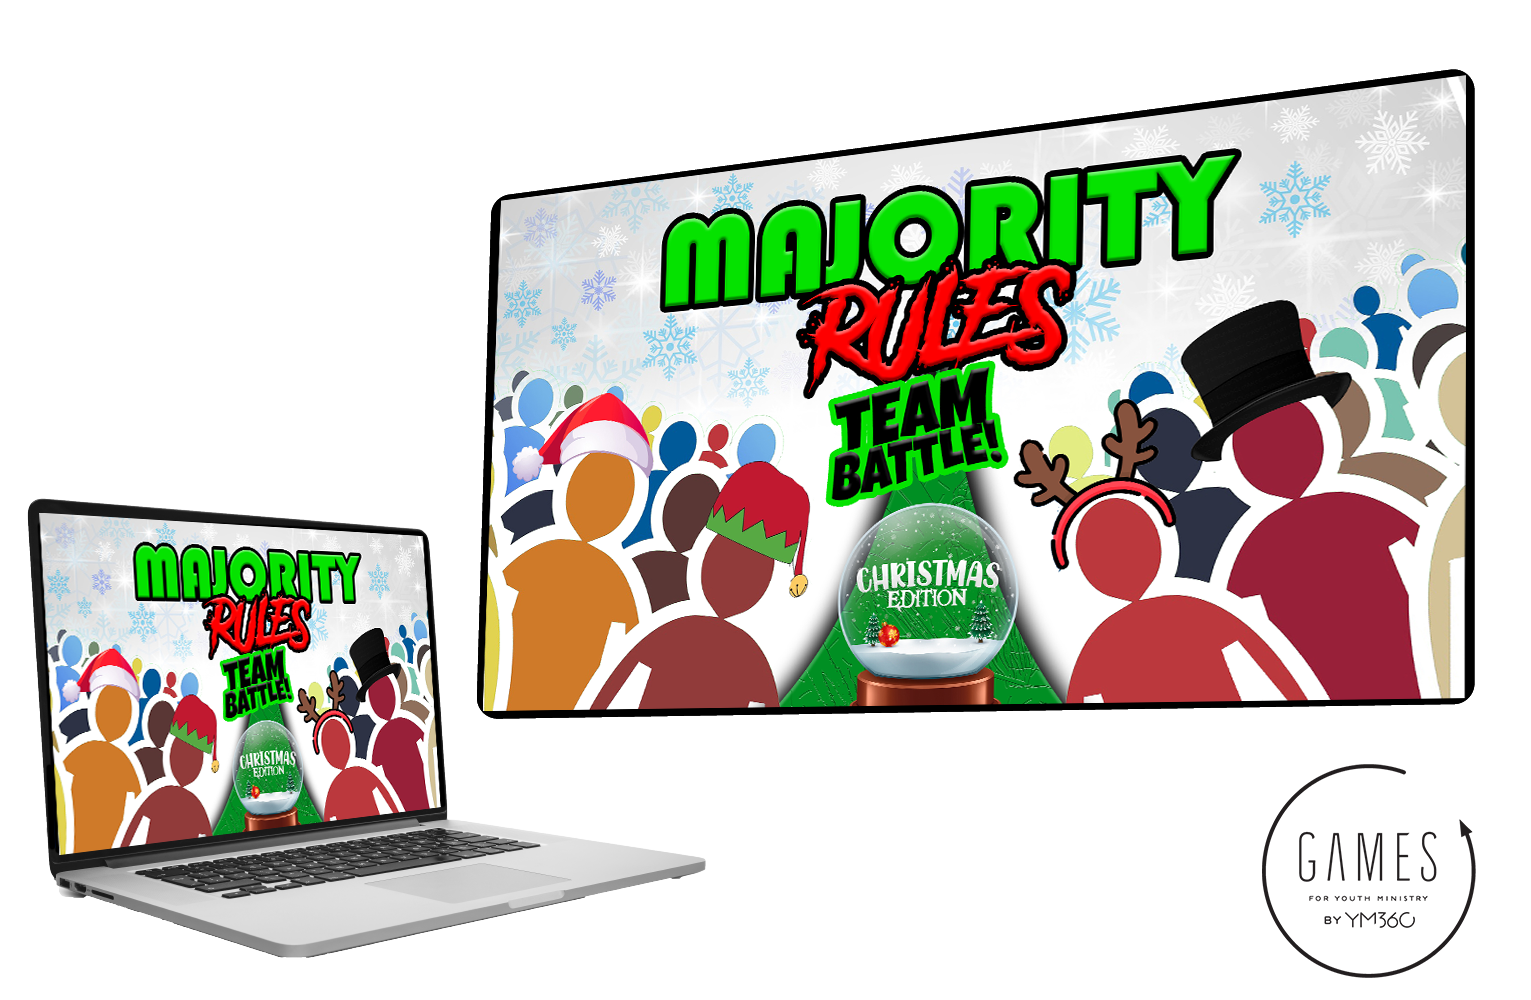 Majority Rules: Team Battle (Christmas Edition)